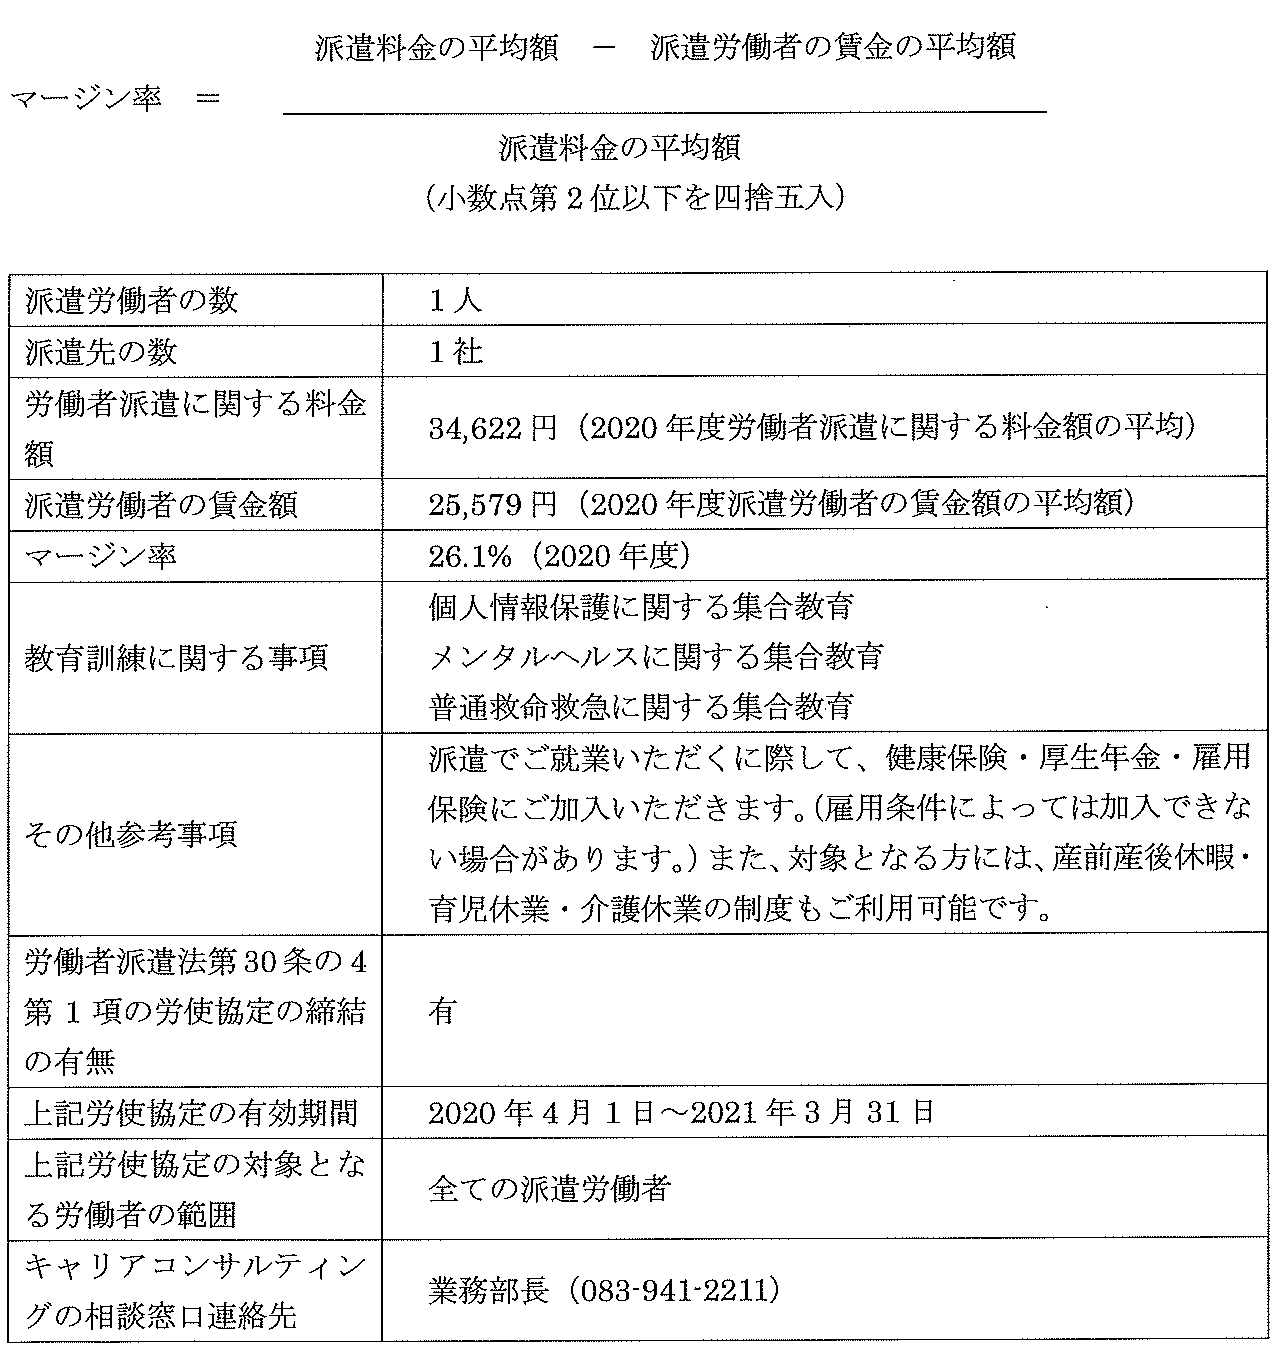 https://www.yamaguchi.alsok.co.jp/20210910.gif